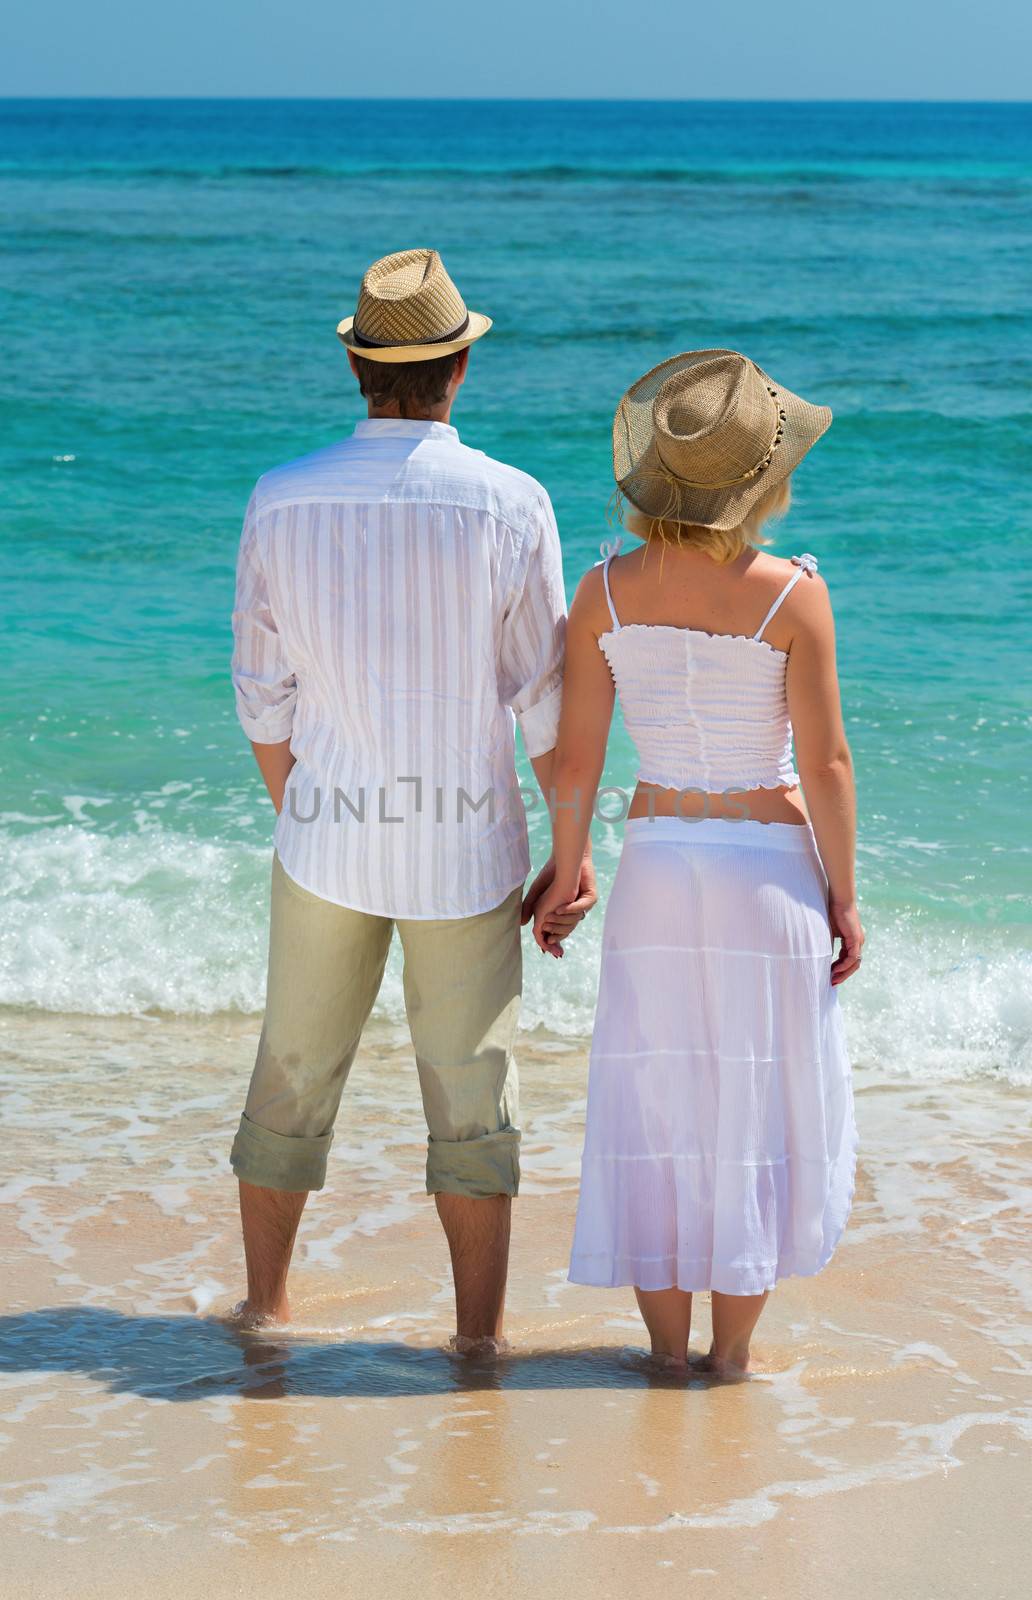 Couple enjoying at beach back view by iryna_rasko